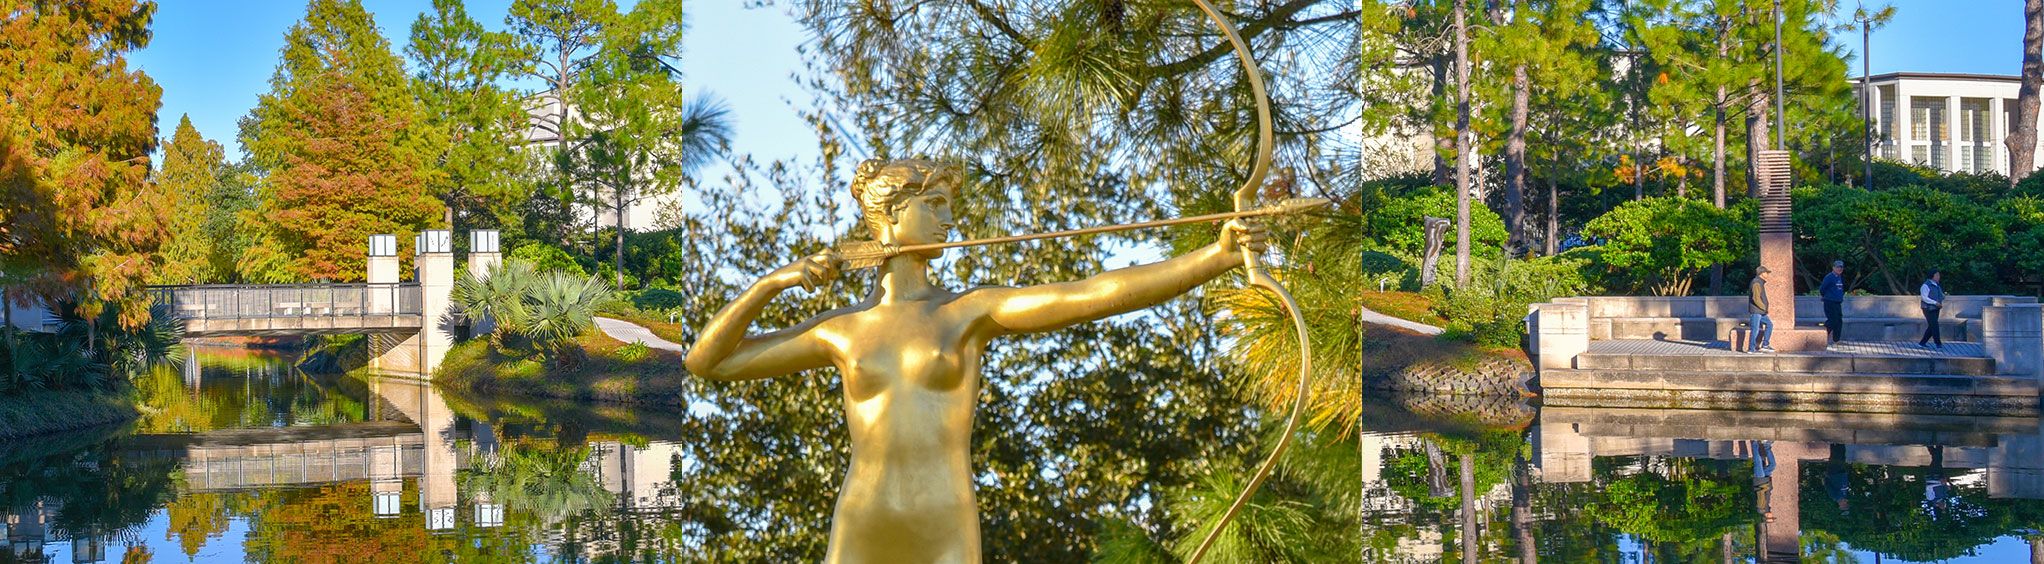 The Sydney and Walda Besthoff Sculpture Garden in New Orleans, LA